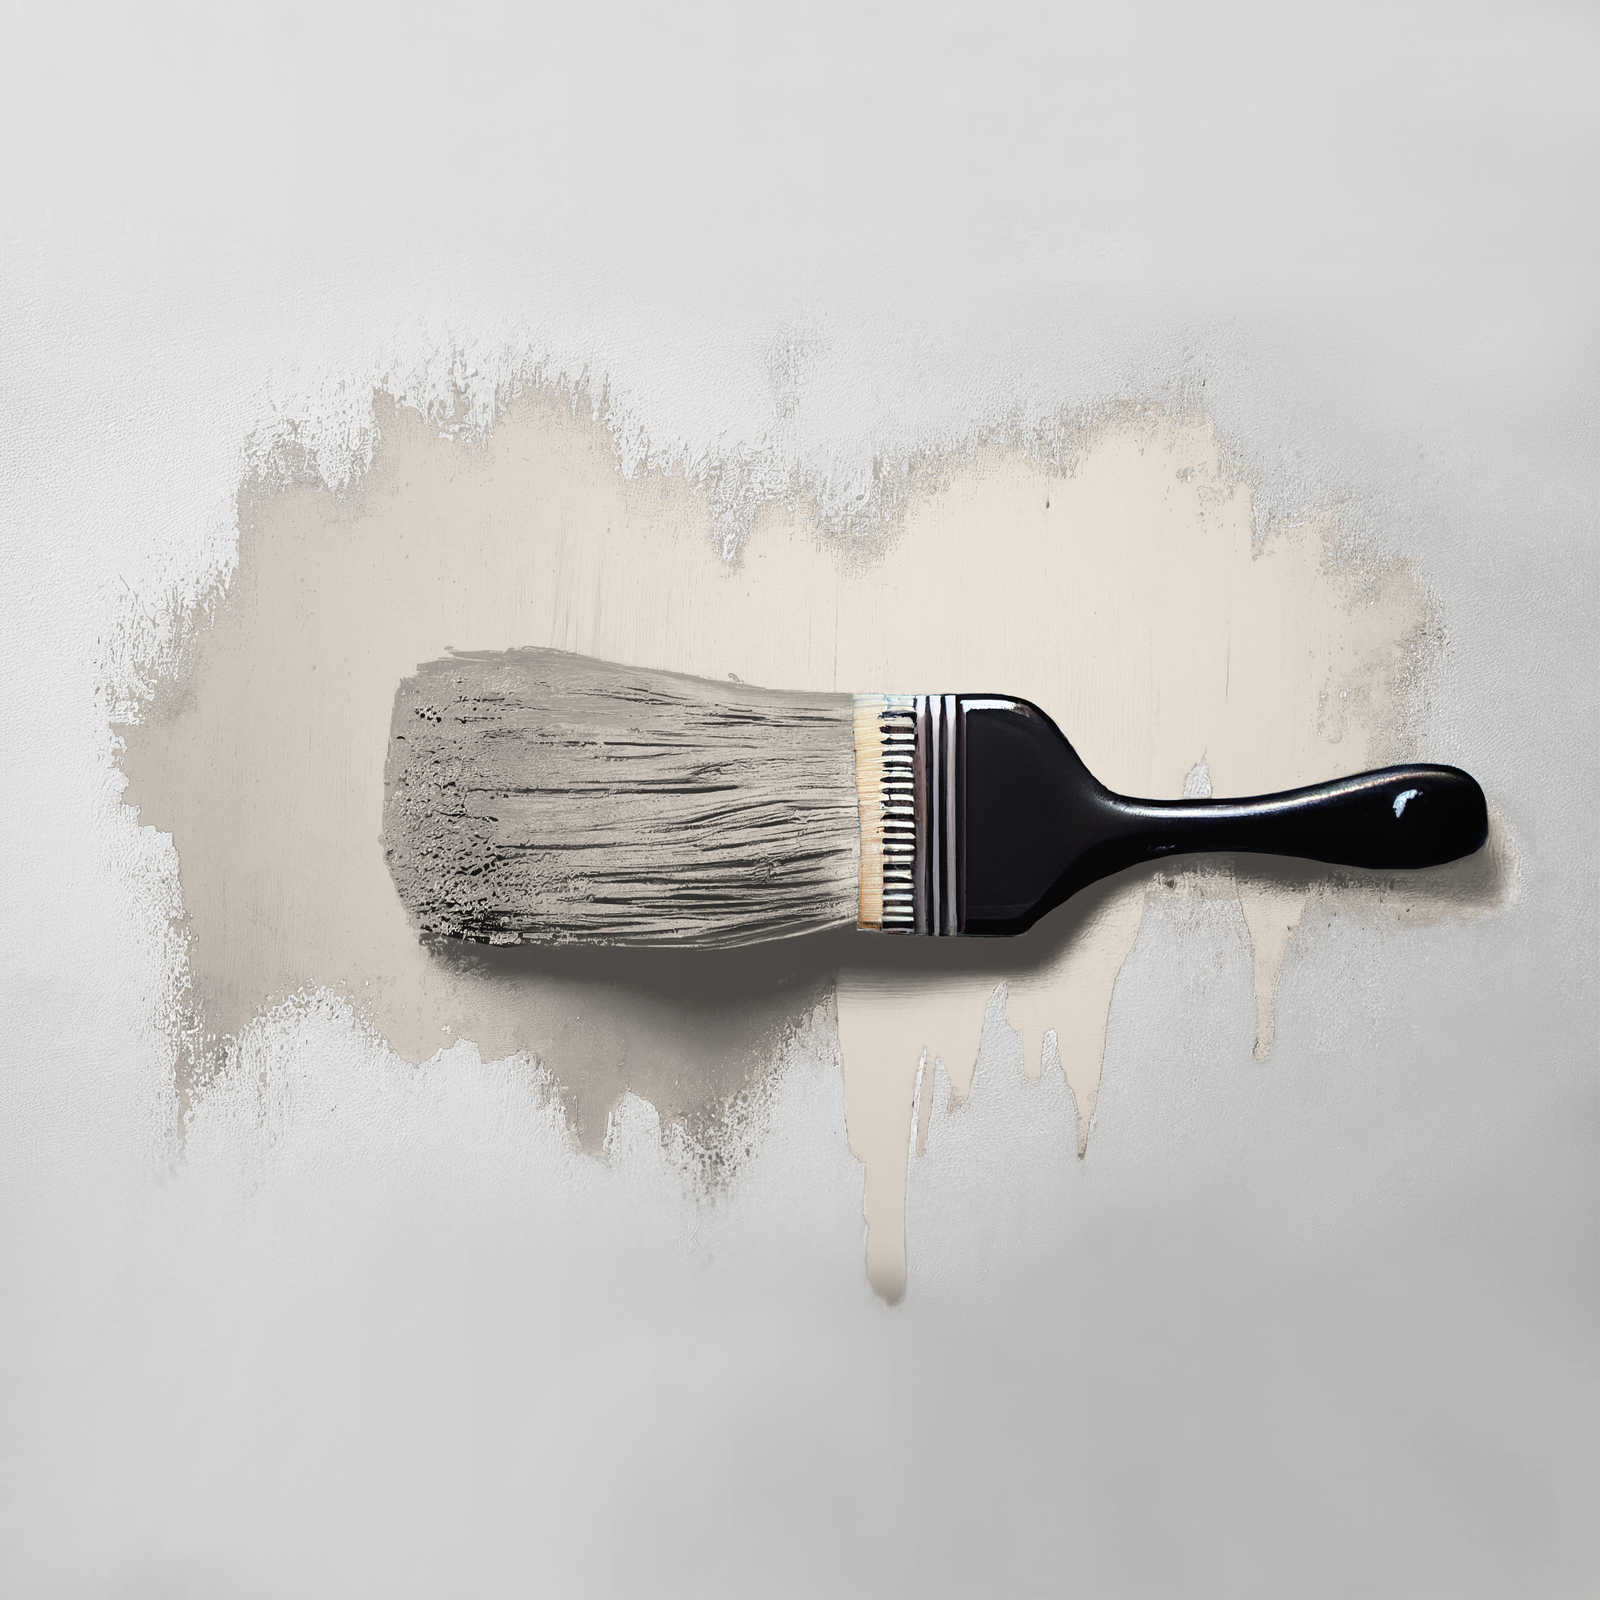             Pittura murale TCK6019 »Melty Marzipan« in beige delicato – 2,5 litri
        